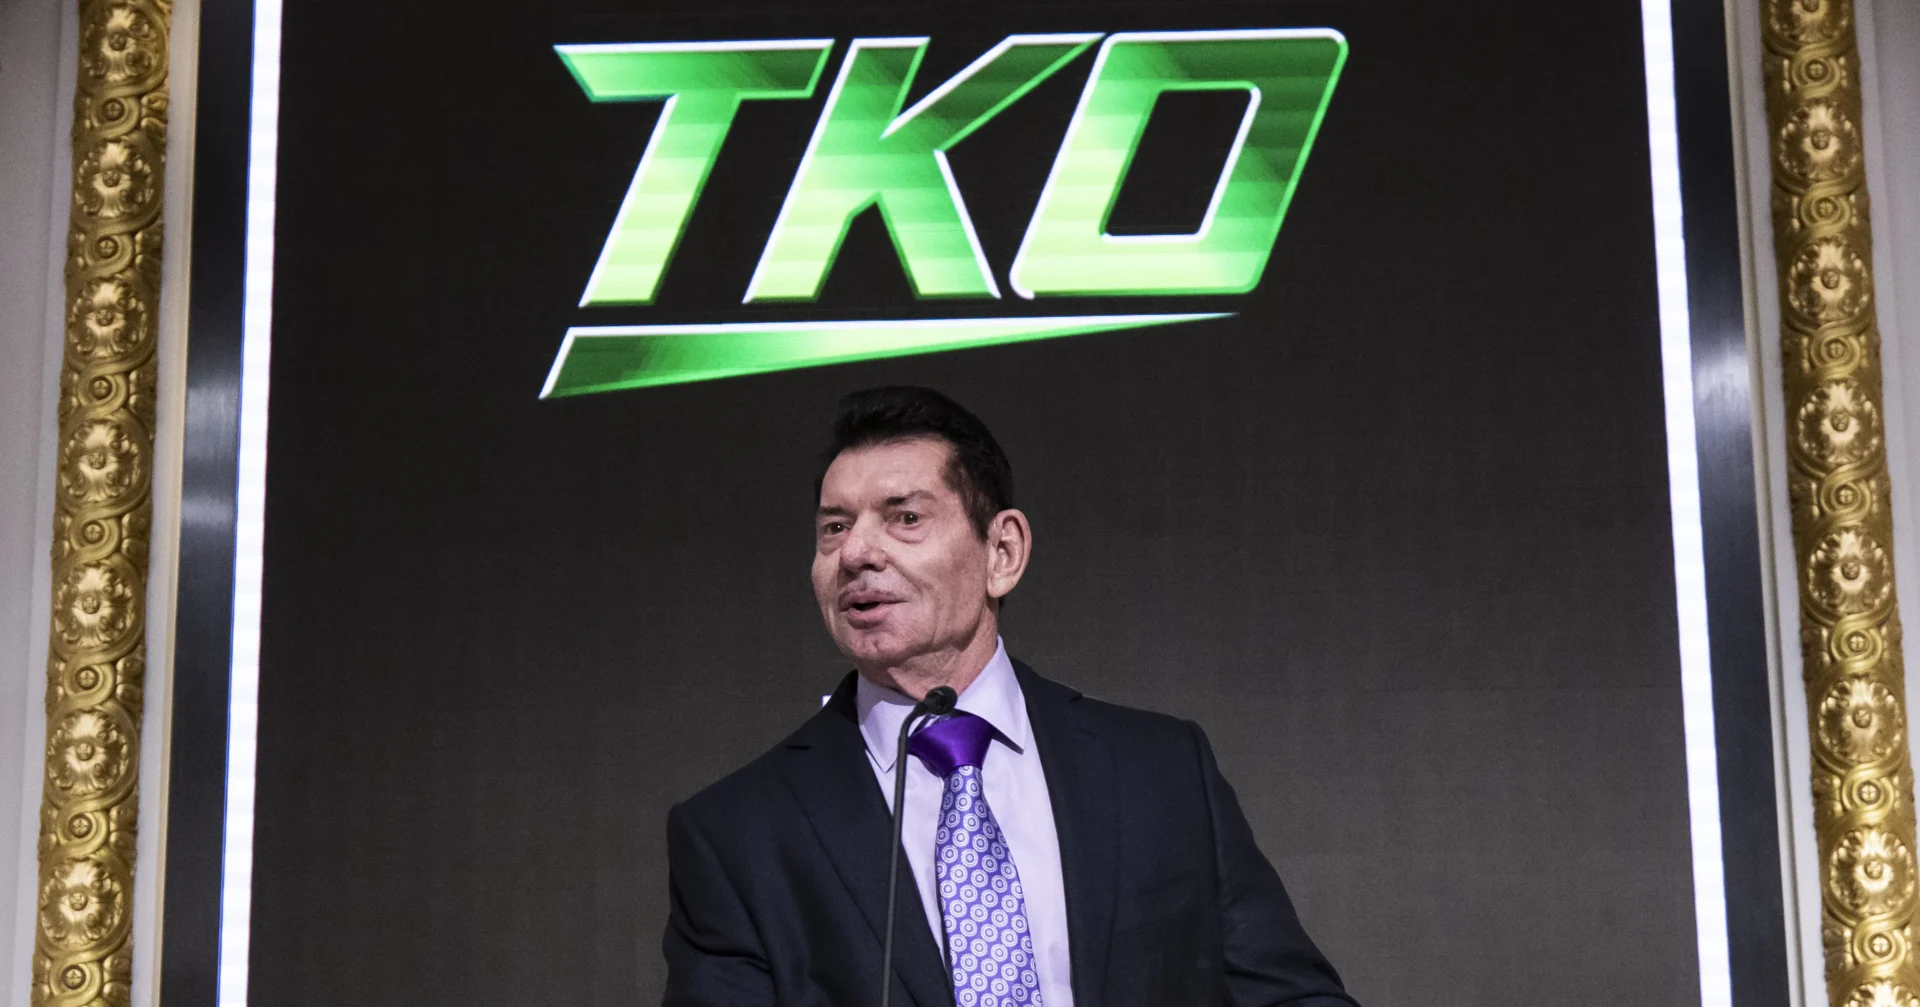 TKO Group Submits SEC Filing Regarding Vince McMahon's Resignation